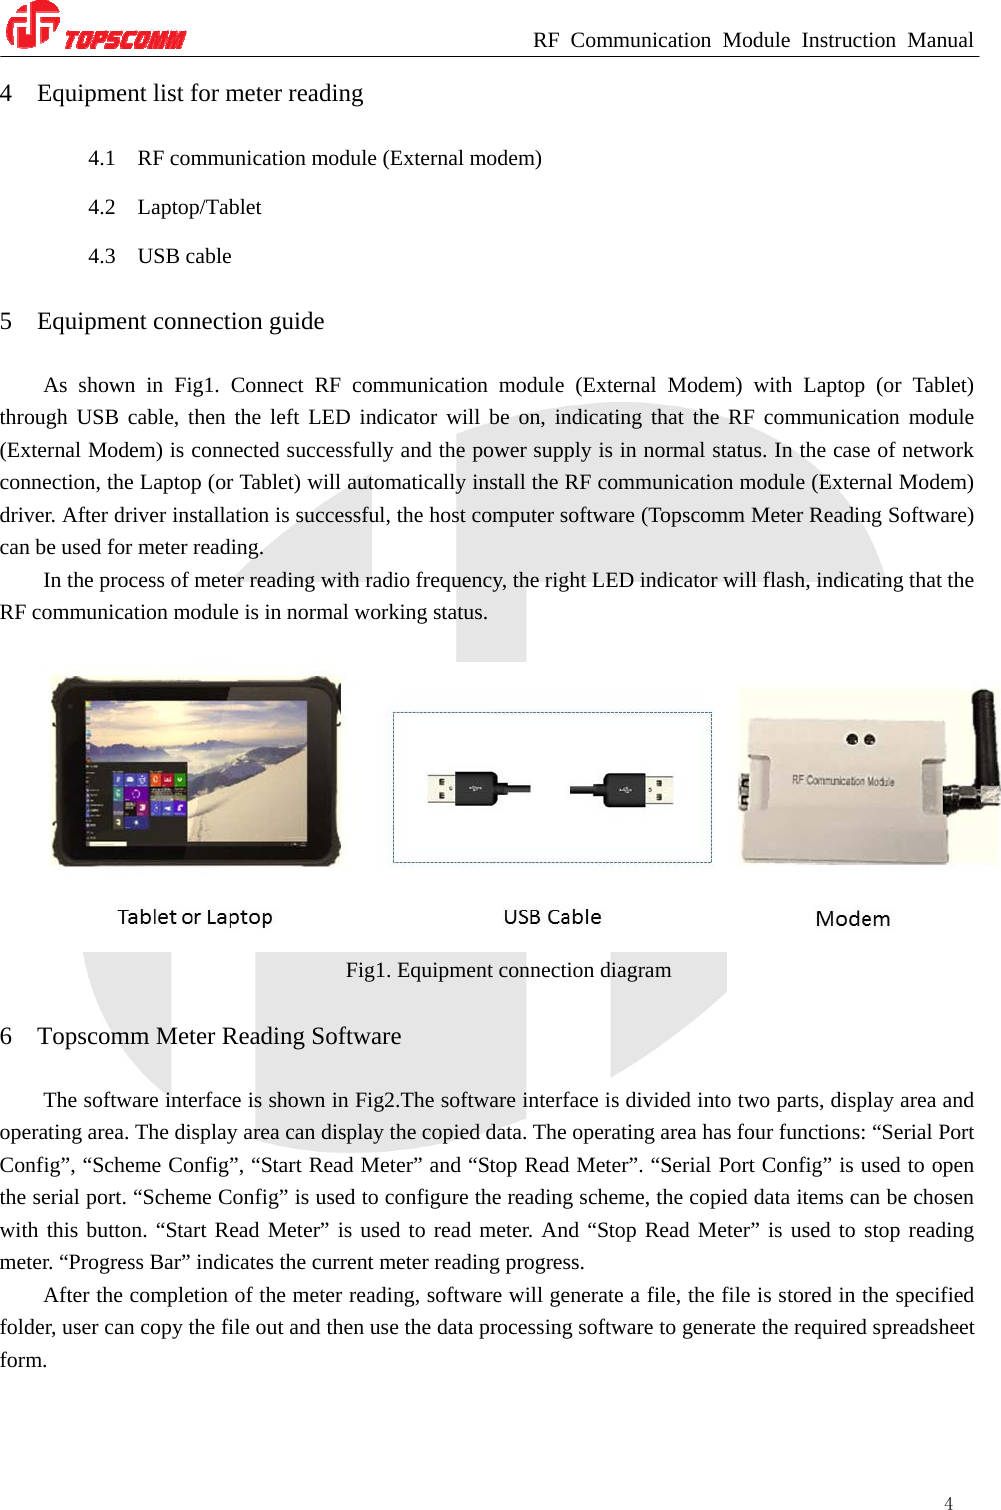 Qingdao Topscomm Communication Rflora1276 Rf Lora Module User Manual Modem 1